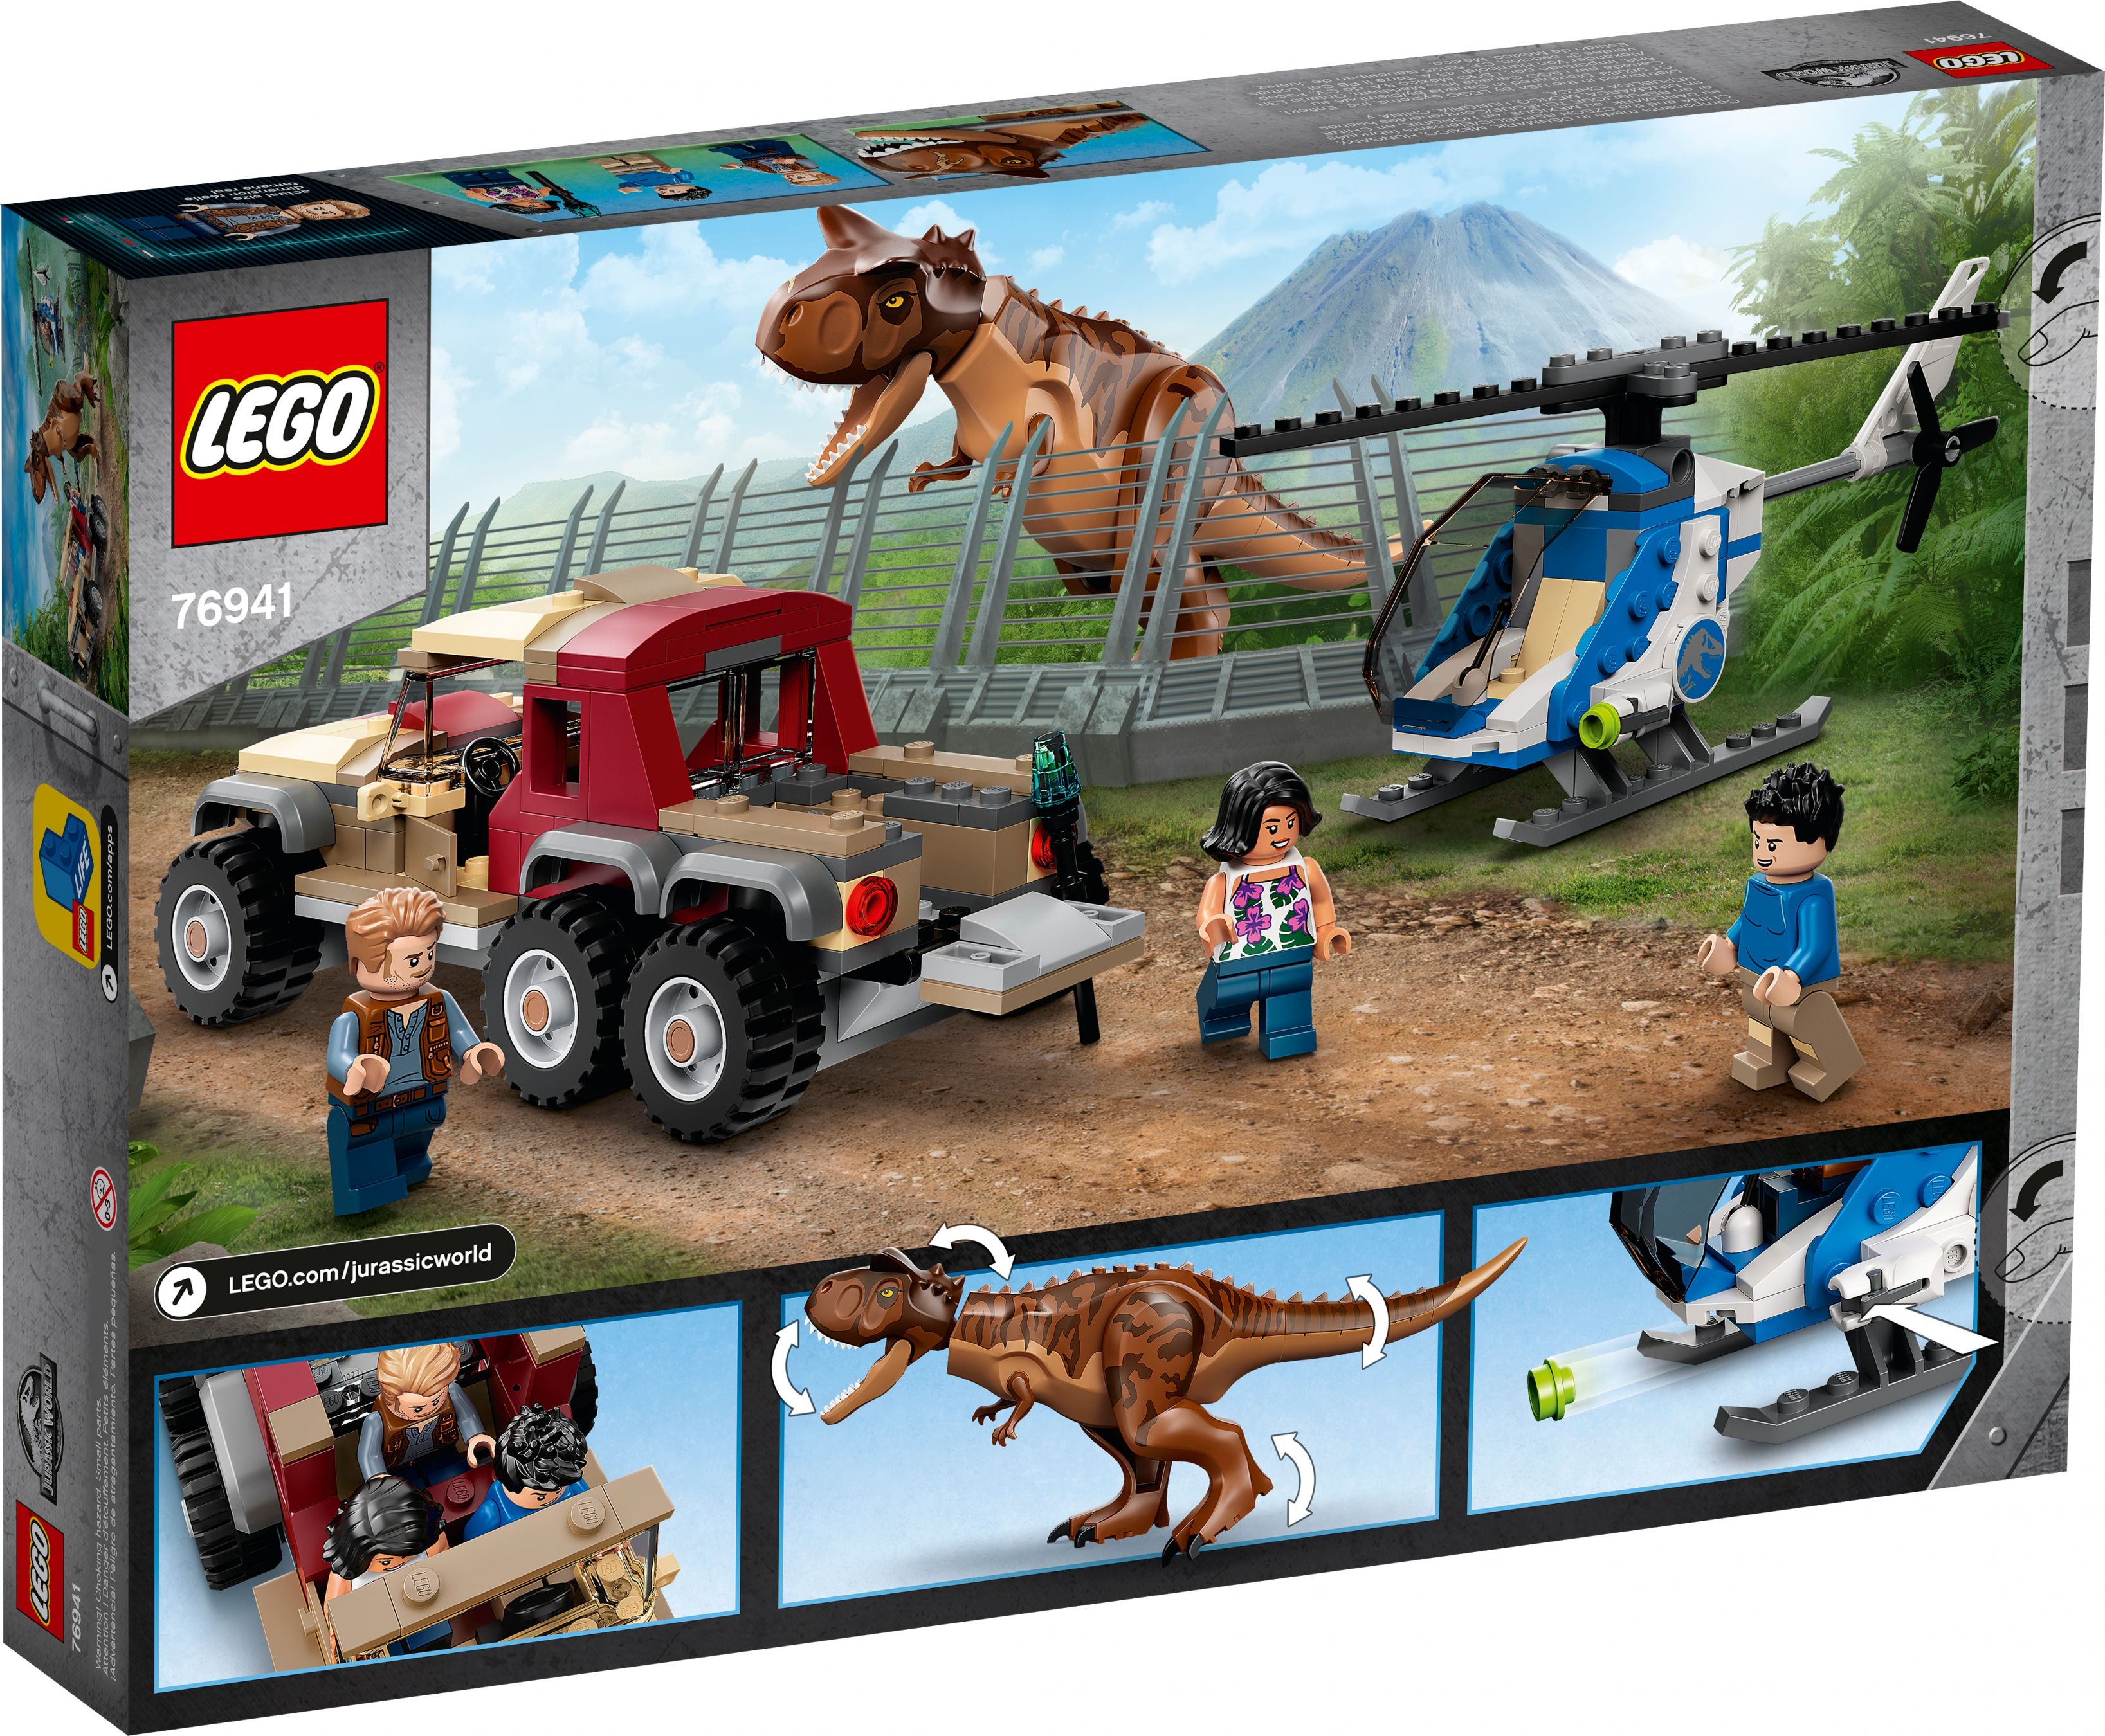 LEGO Jurassic World 76941 Verfolgung des Carnotaurus LEGO_76941_alt8.jpg